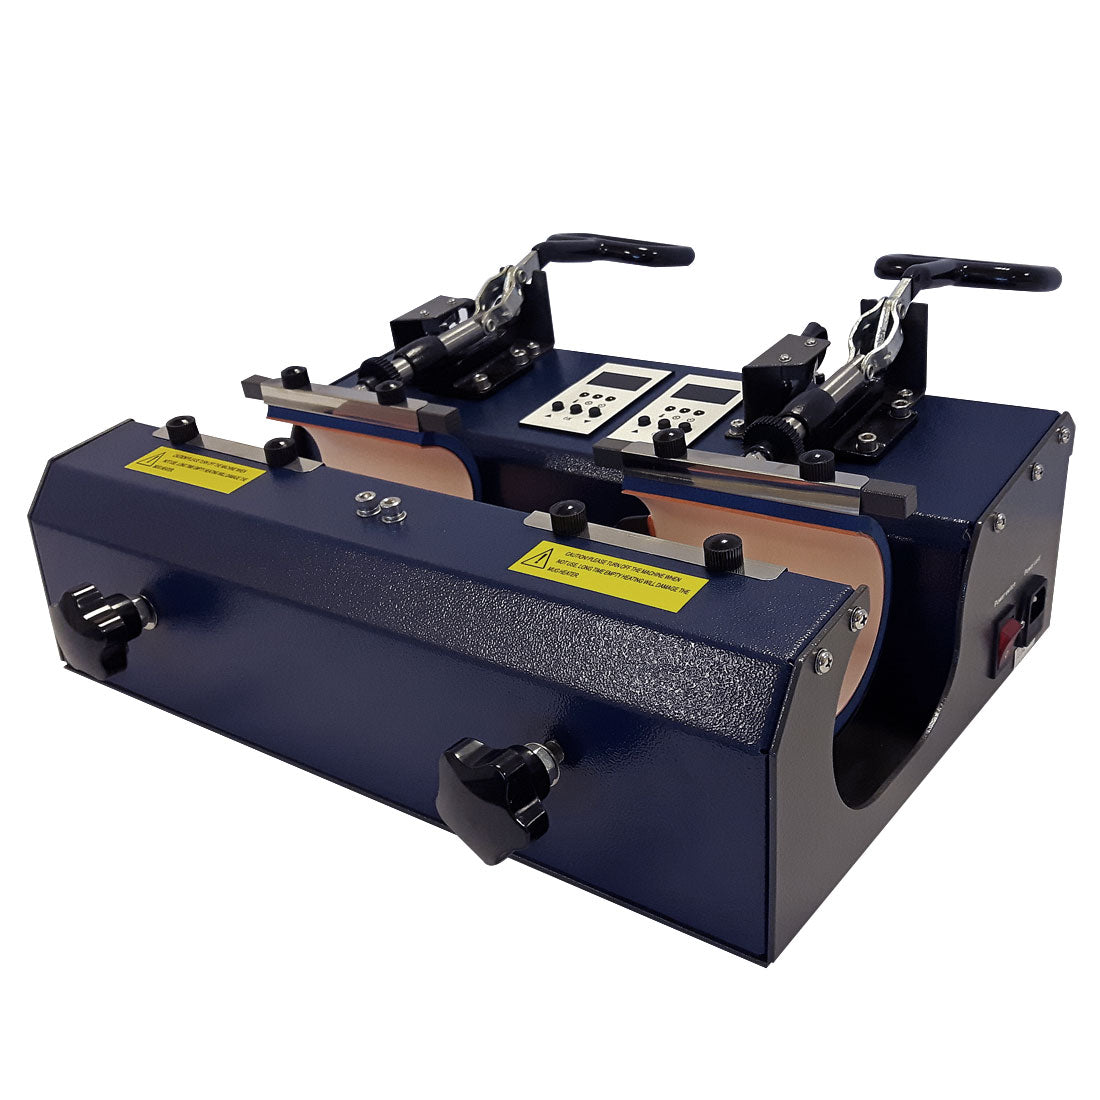 Joto Digital Mug Press - Dual Station Includes 5 Elements - Joto Imaging Supplies Canada